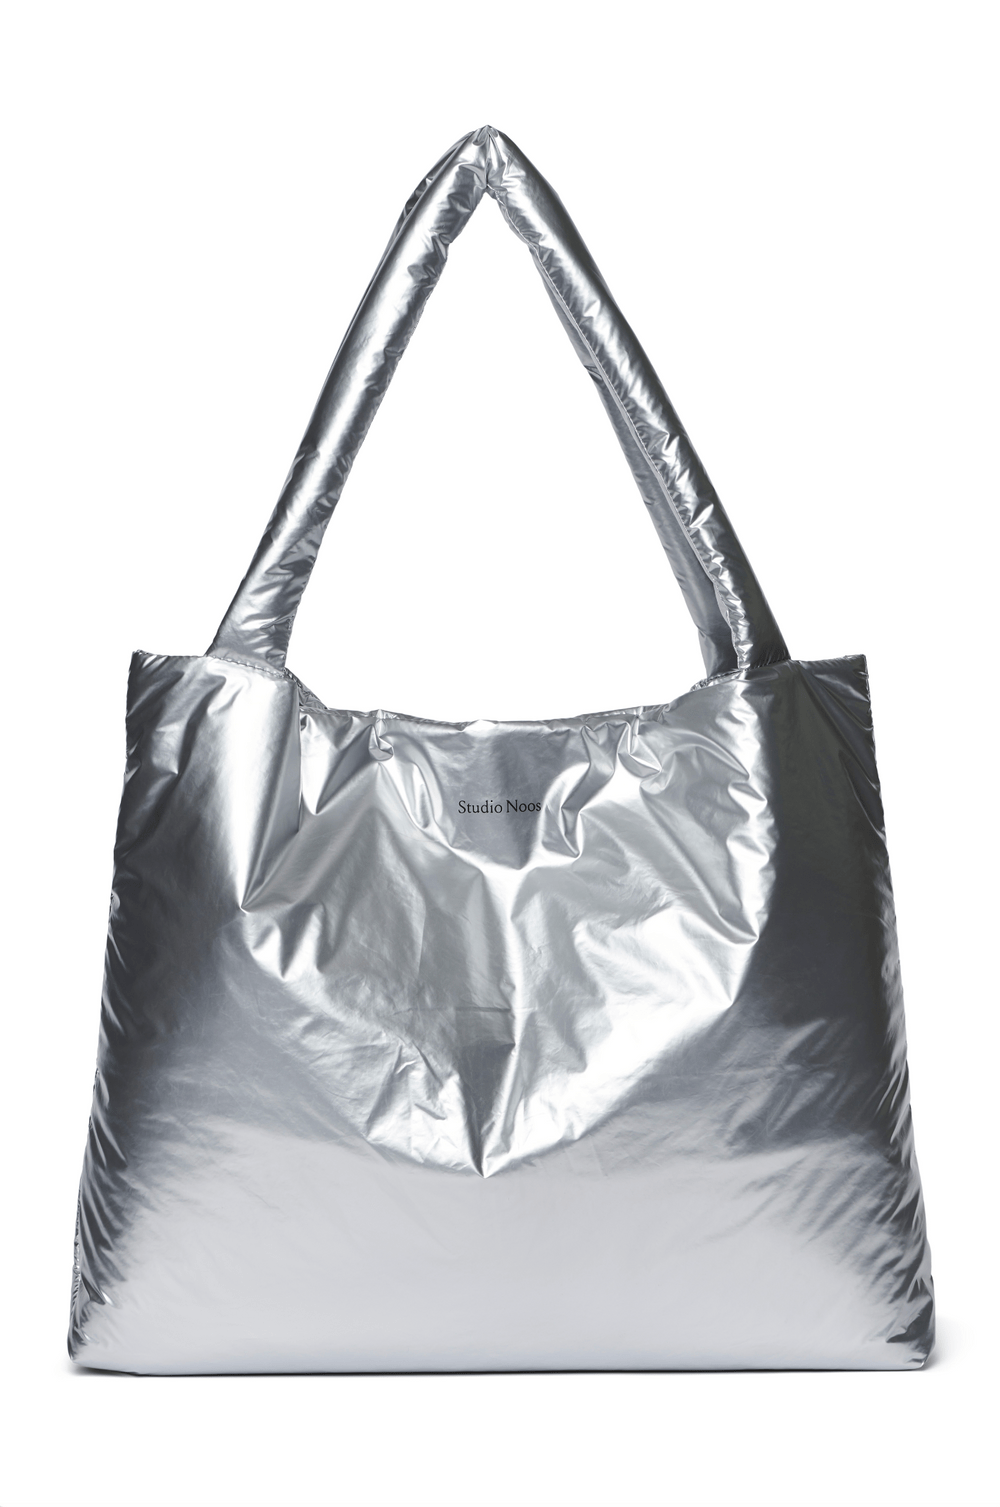 Studio Noos Changing Bag Studio Noos Puffy Mom Stroller Nappy Bag (Silver)